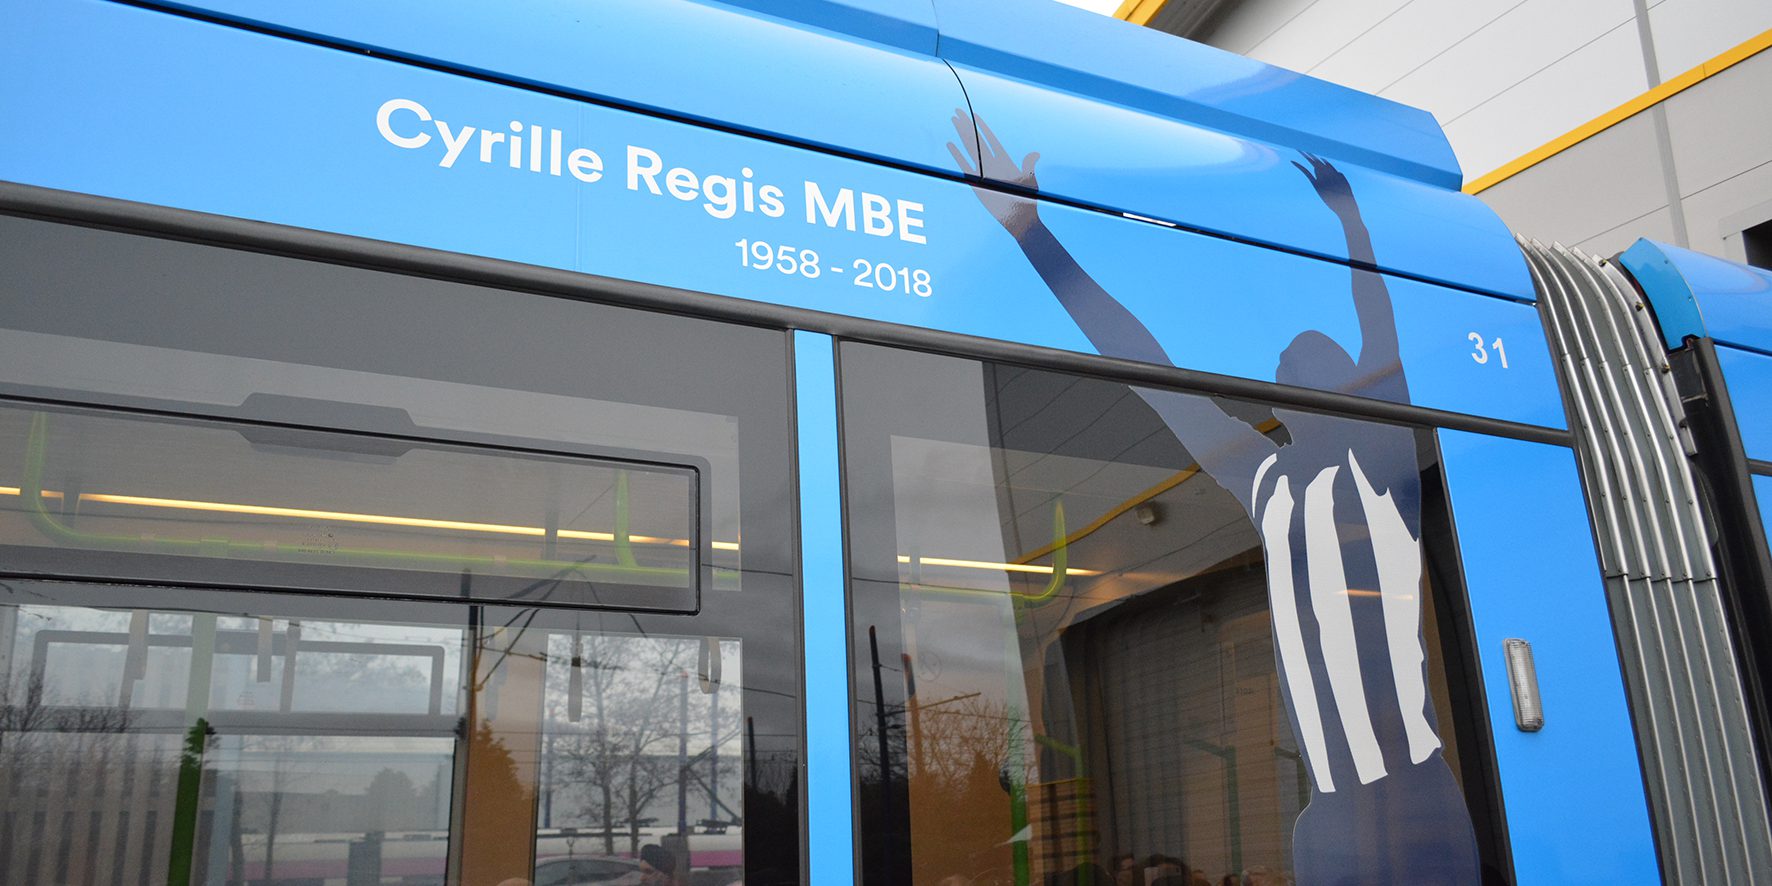 Close up of tram named after Cyrille Regis MBE